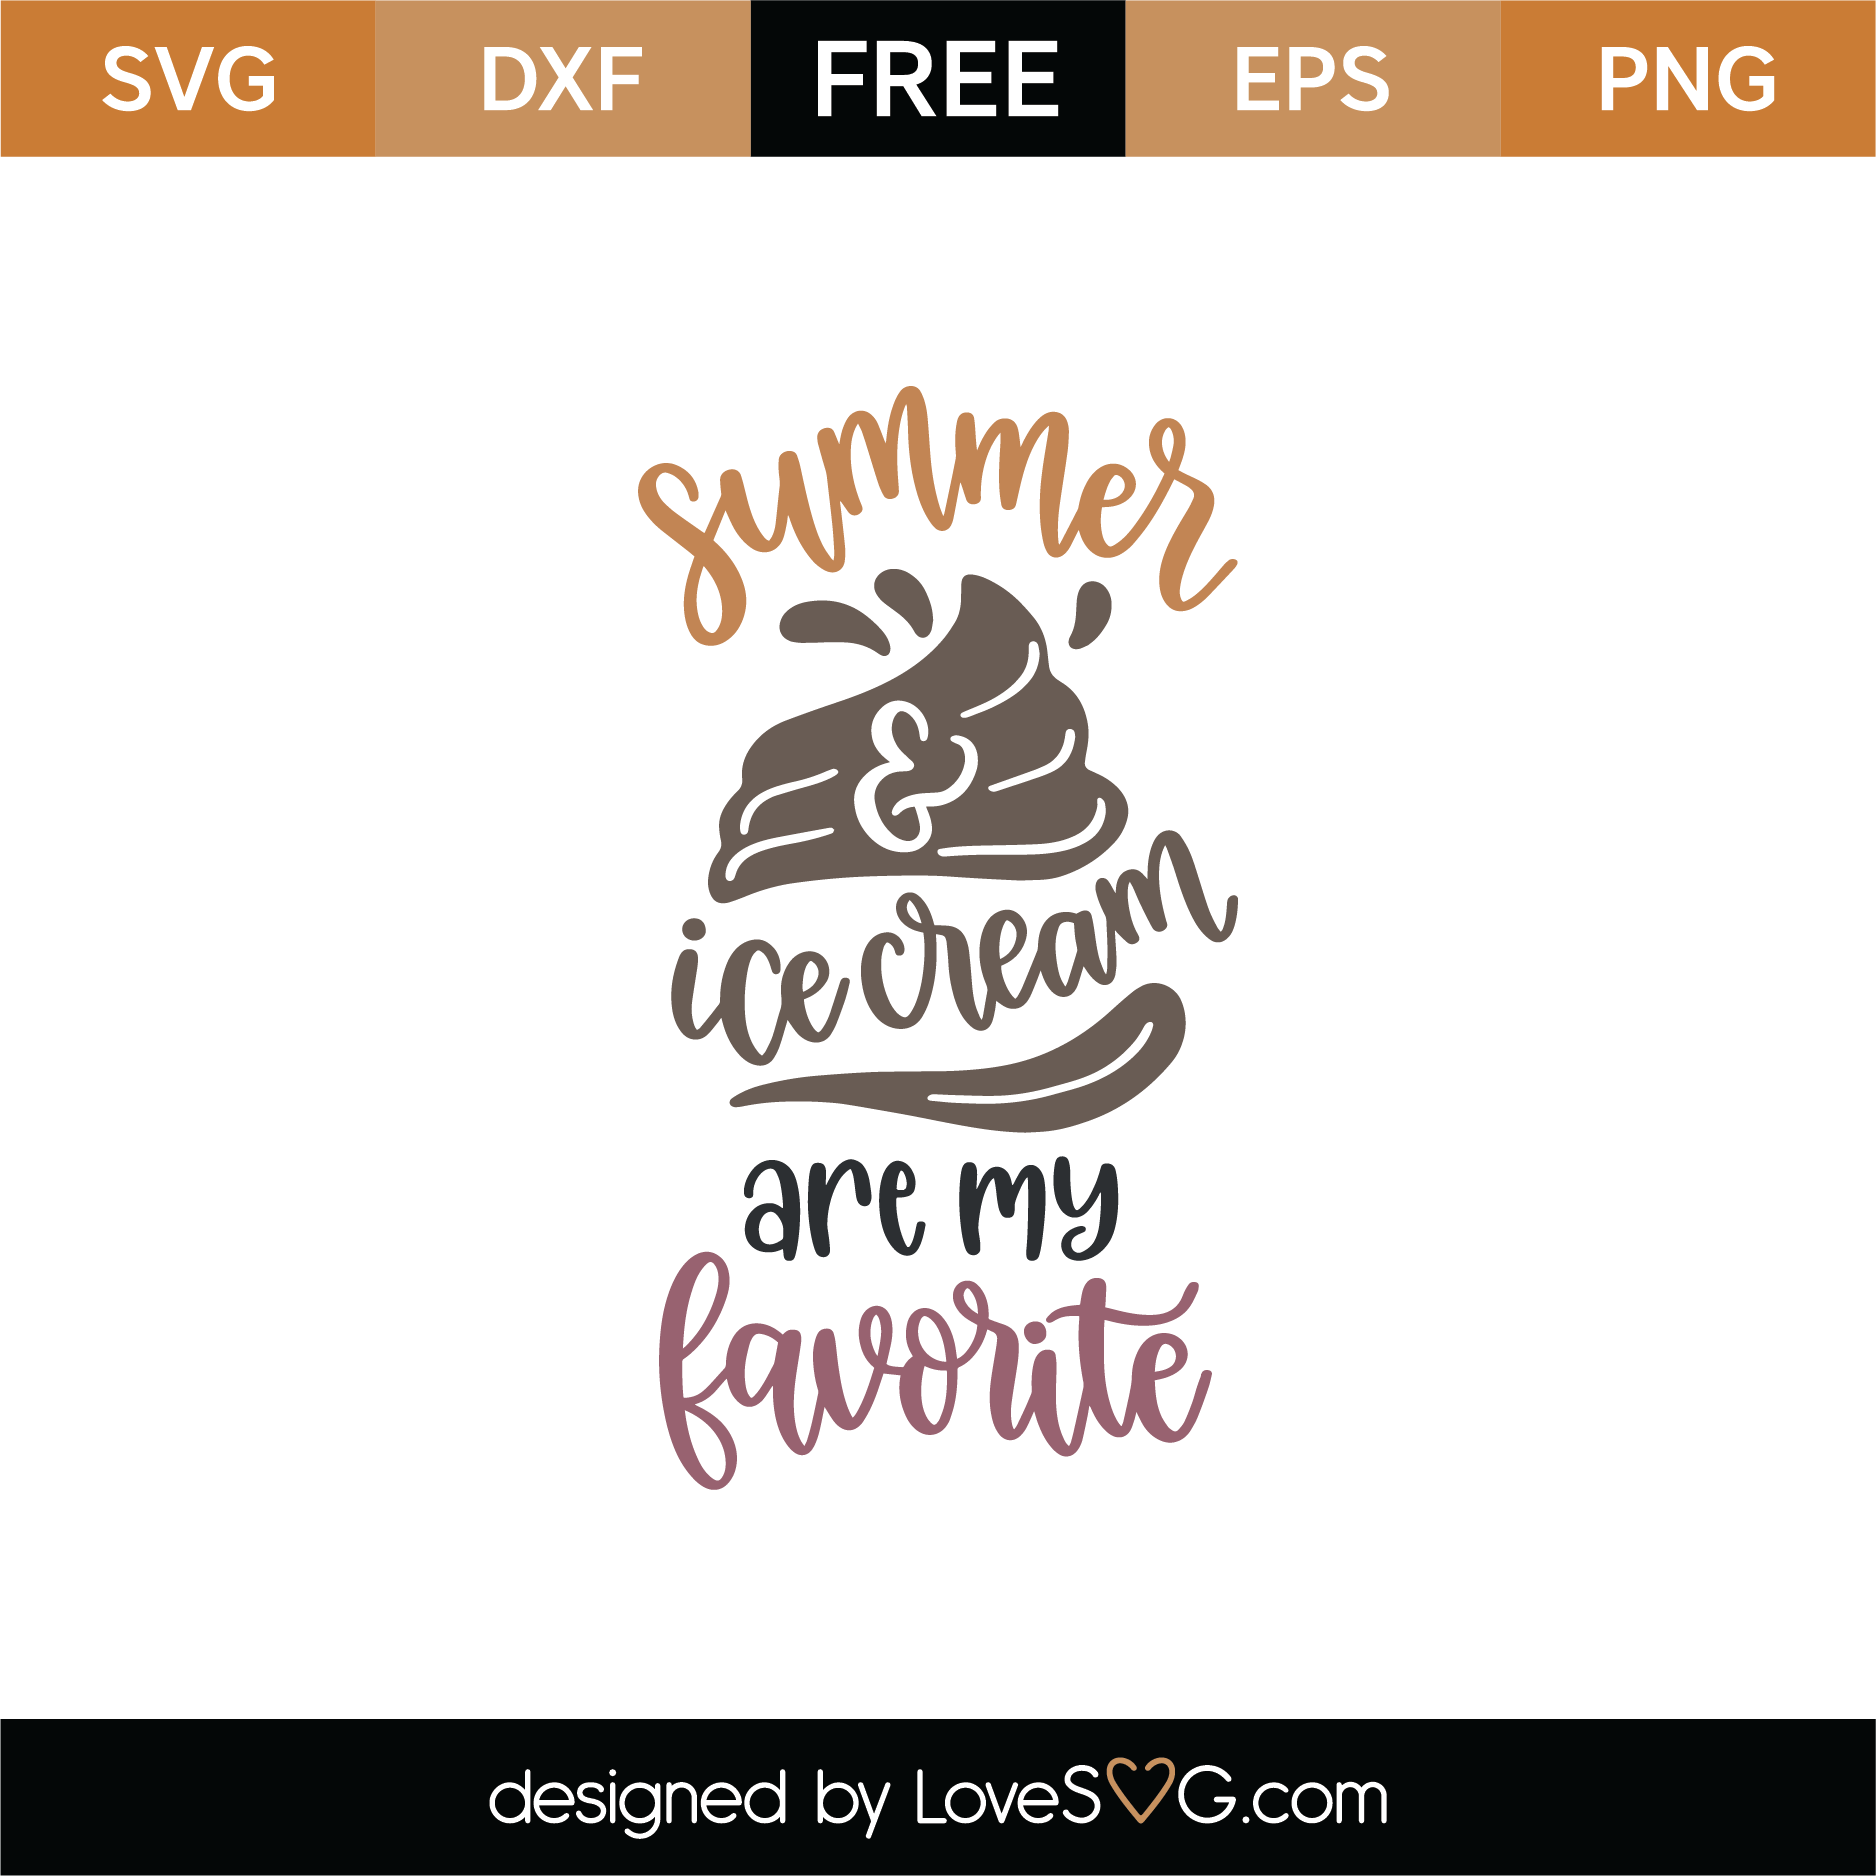 Download Free Summer and Ice Cream SVG Cut File | Lovesvg.com